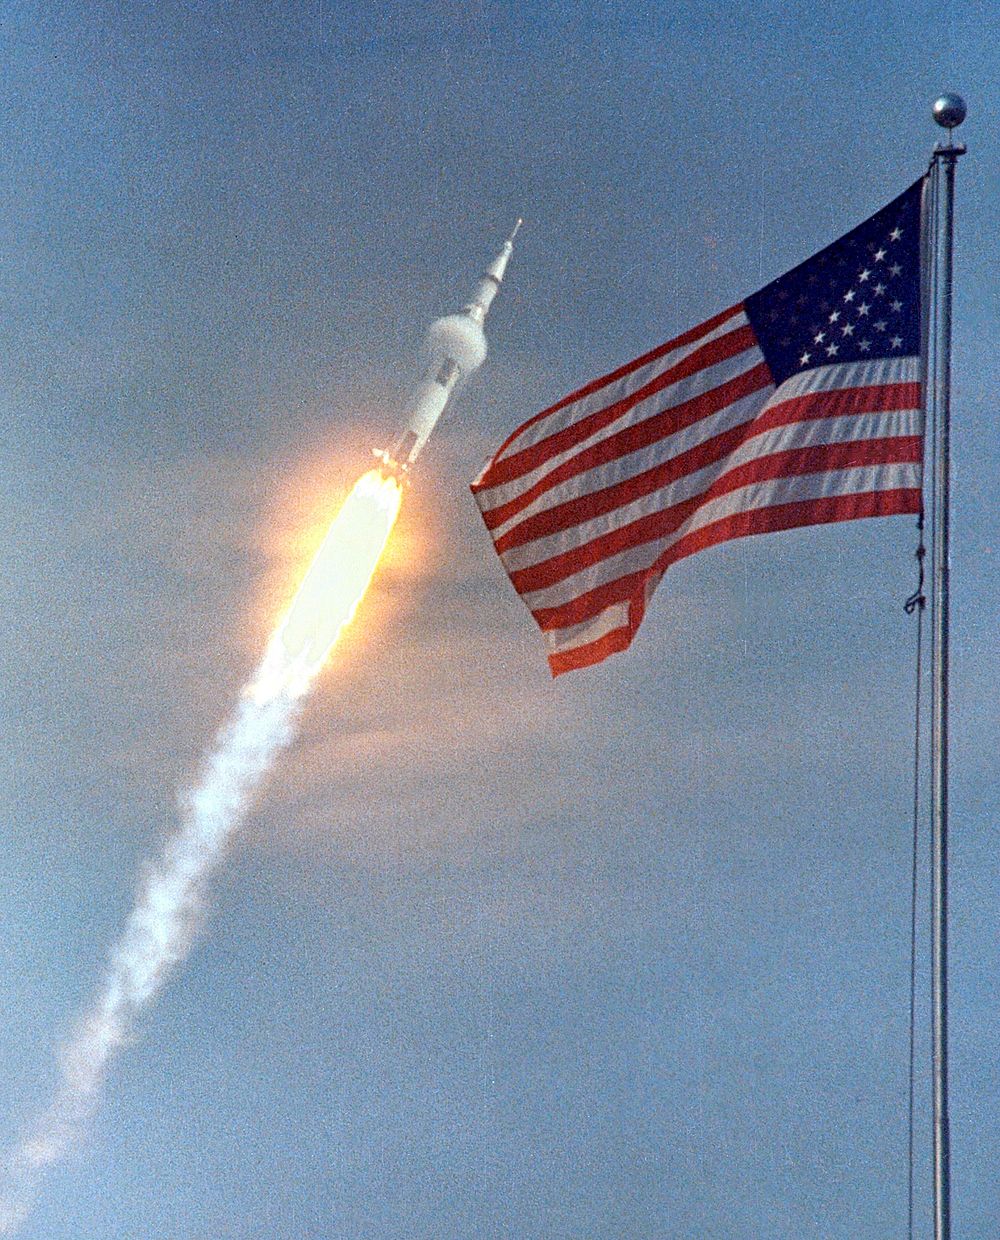 The American Flag heralds the flight of Apollo 11, man's first lunar landing mission. Original from NASA. Digitally enhanced…